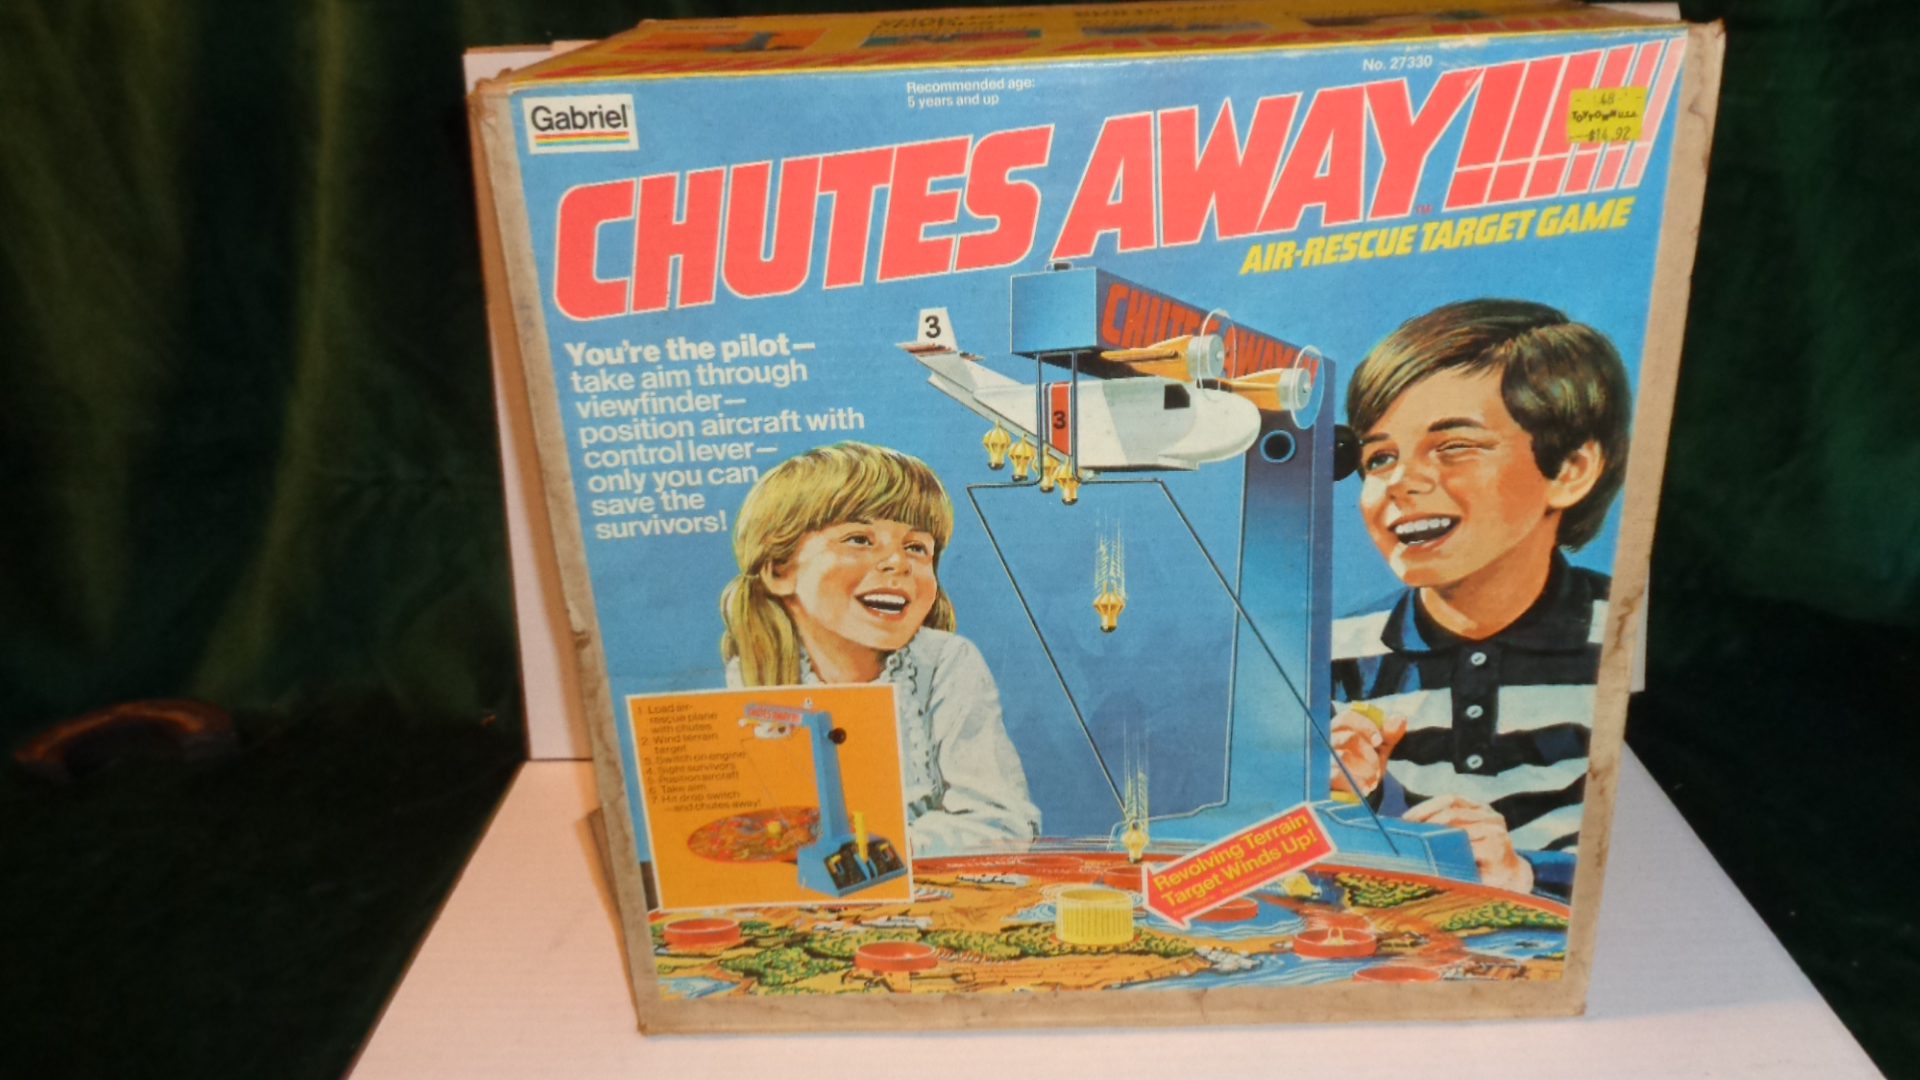 Chutes away air rescue target game box